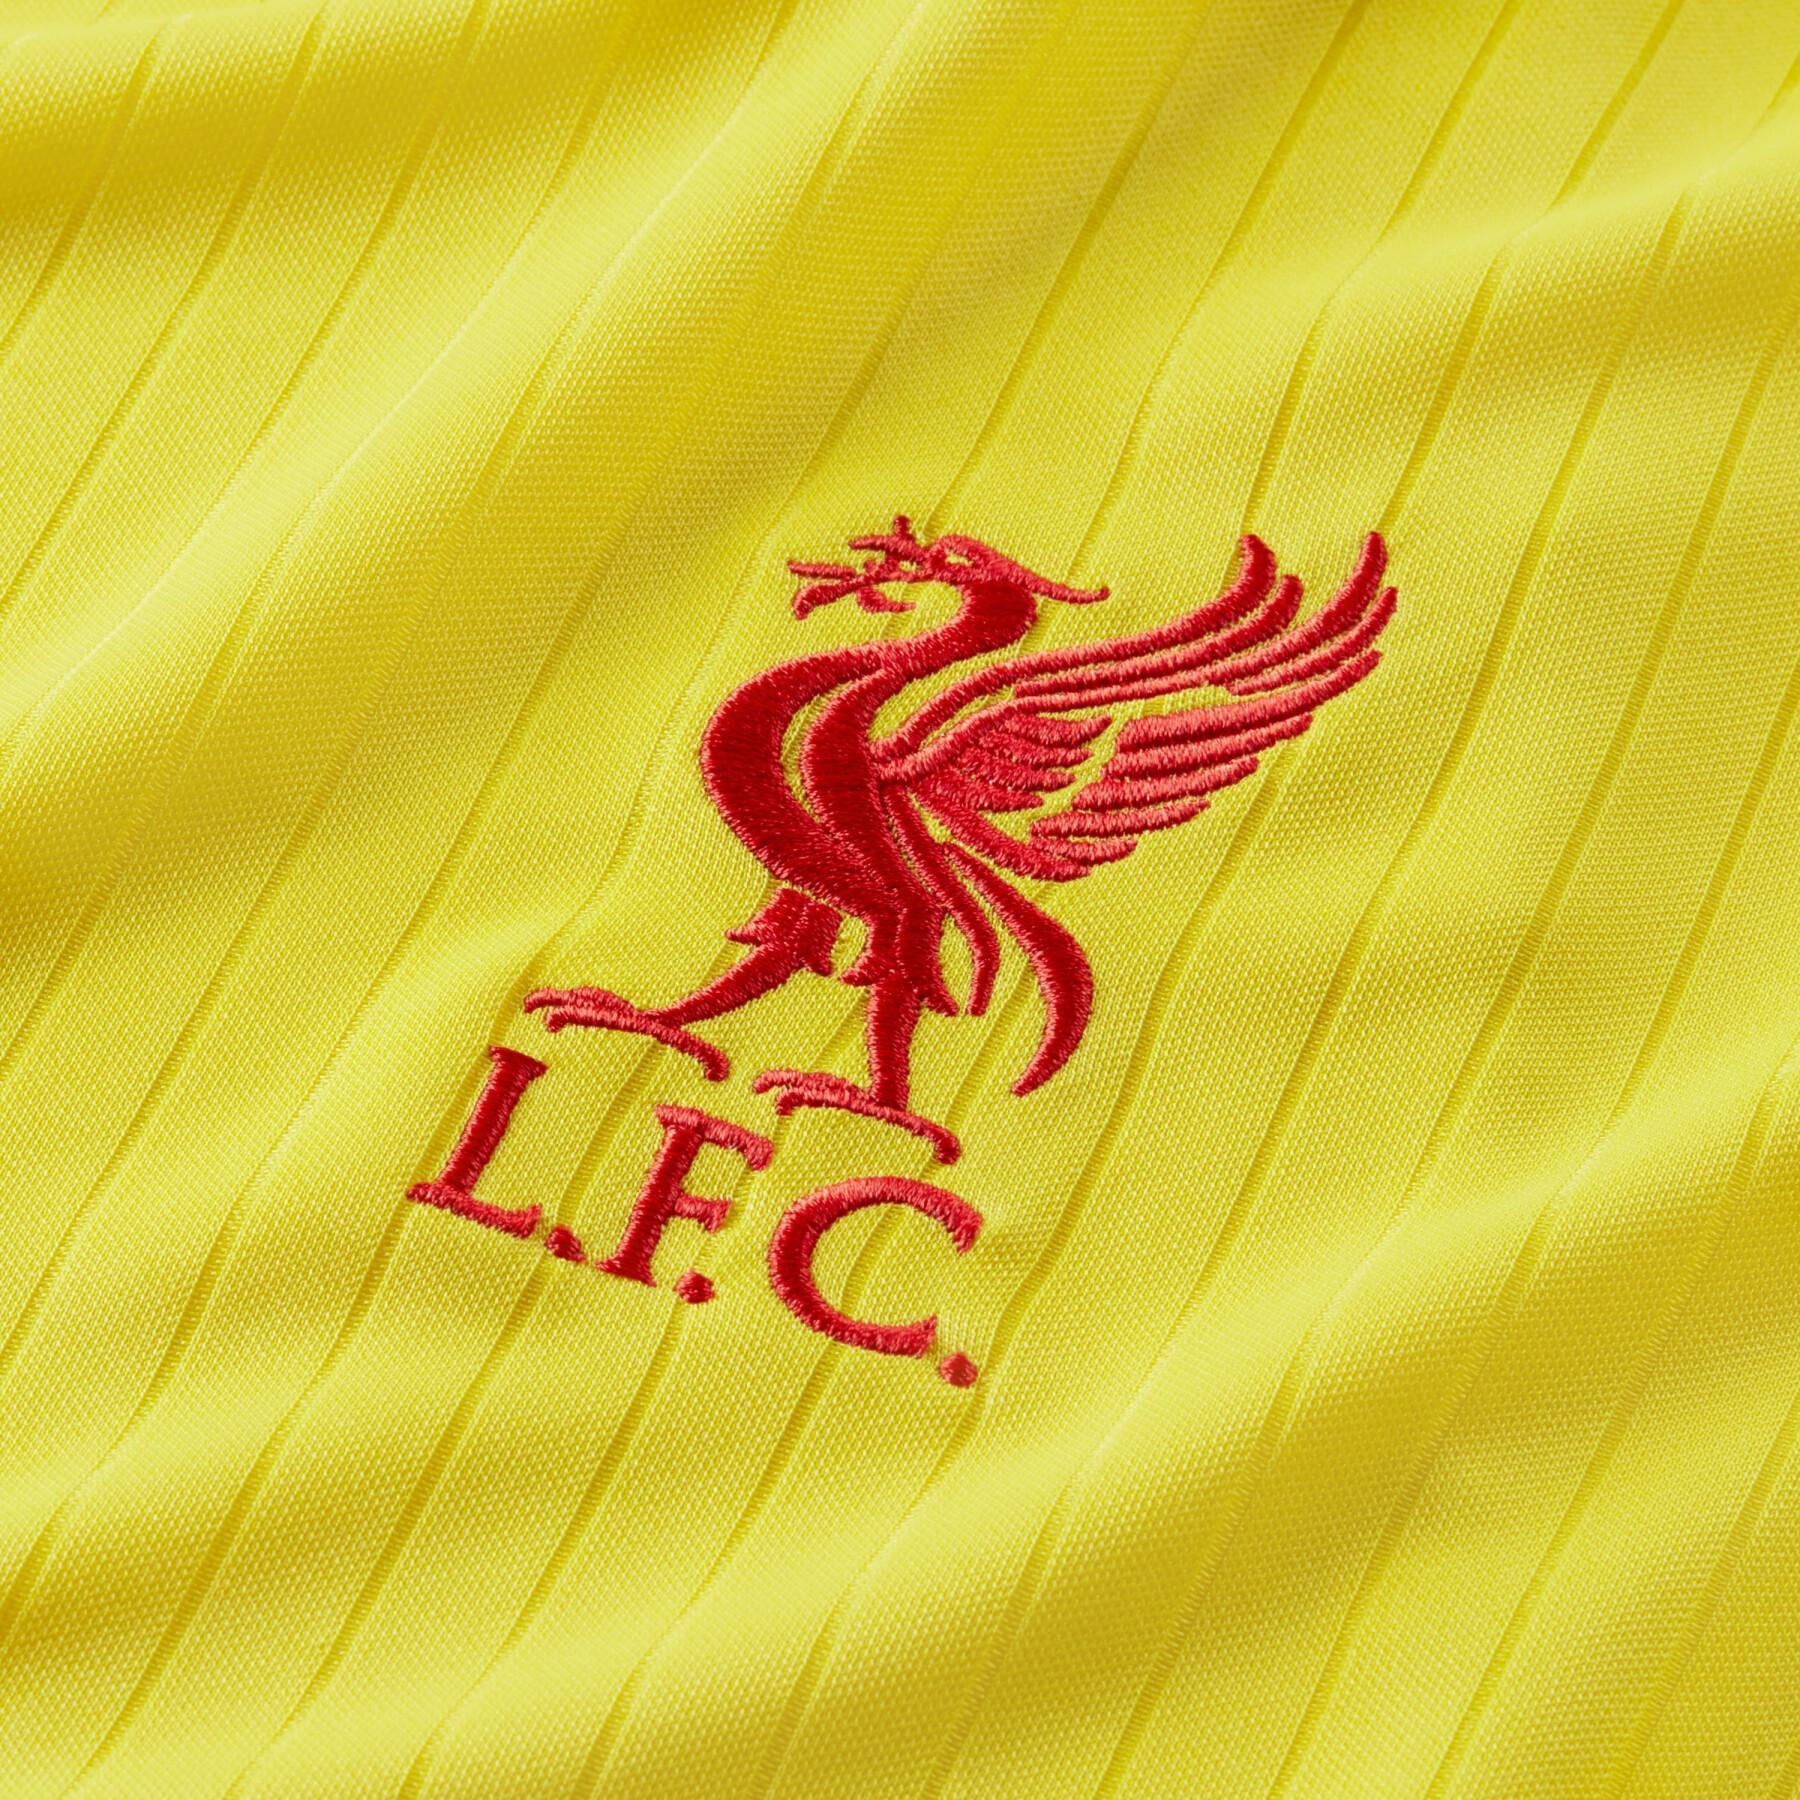 Terceira camisola Liverpool FC 2021/22